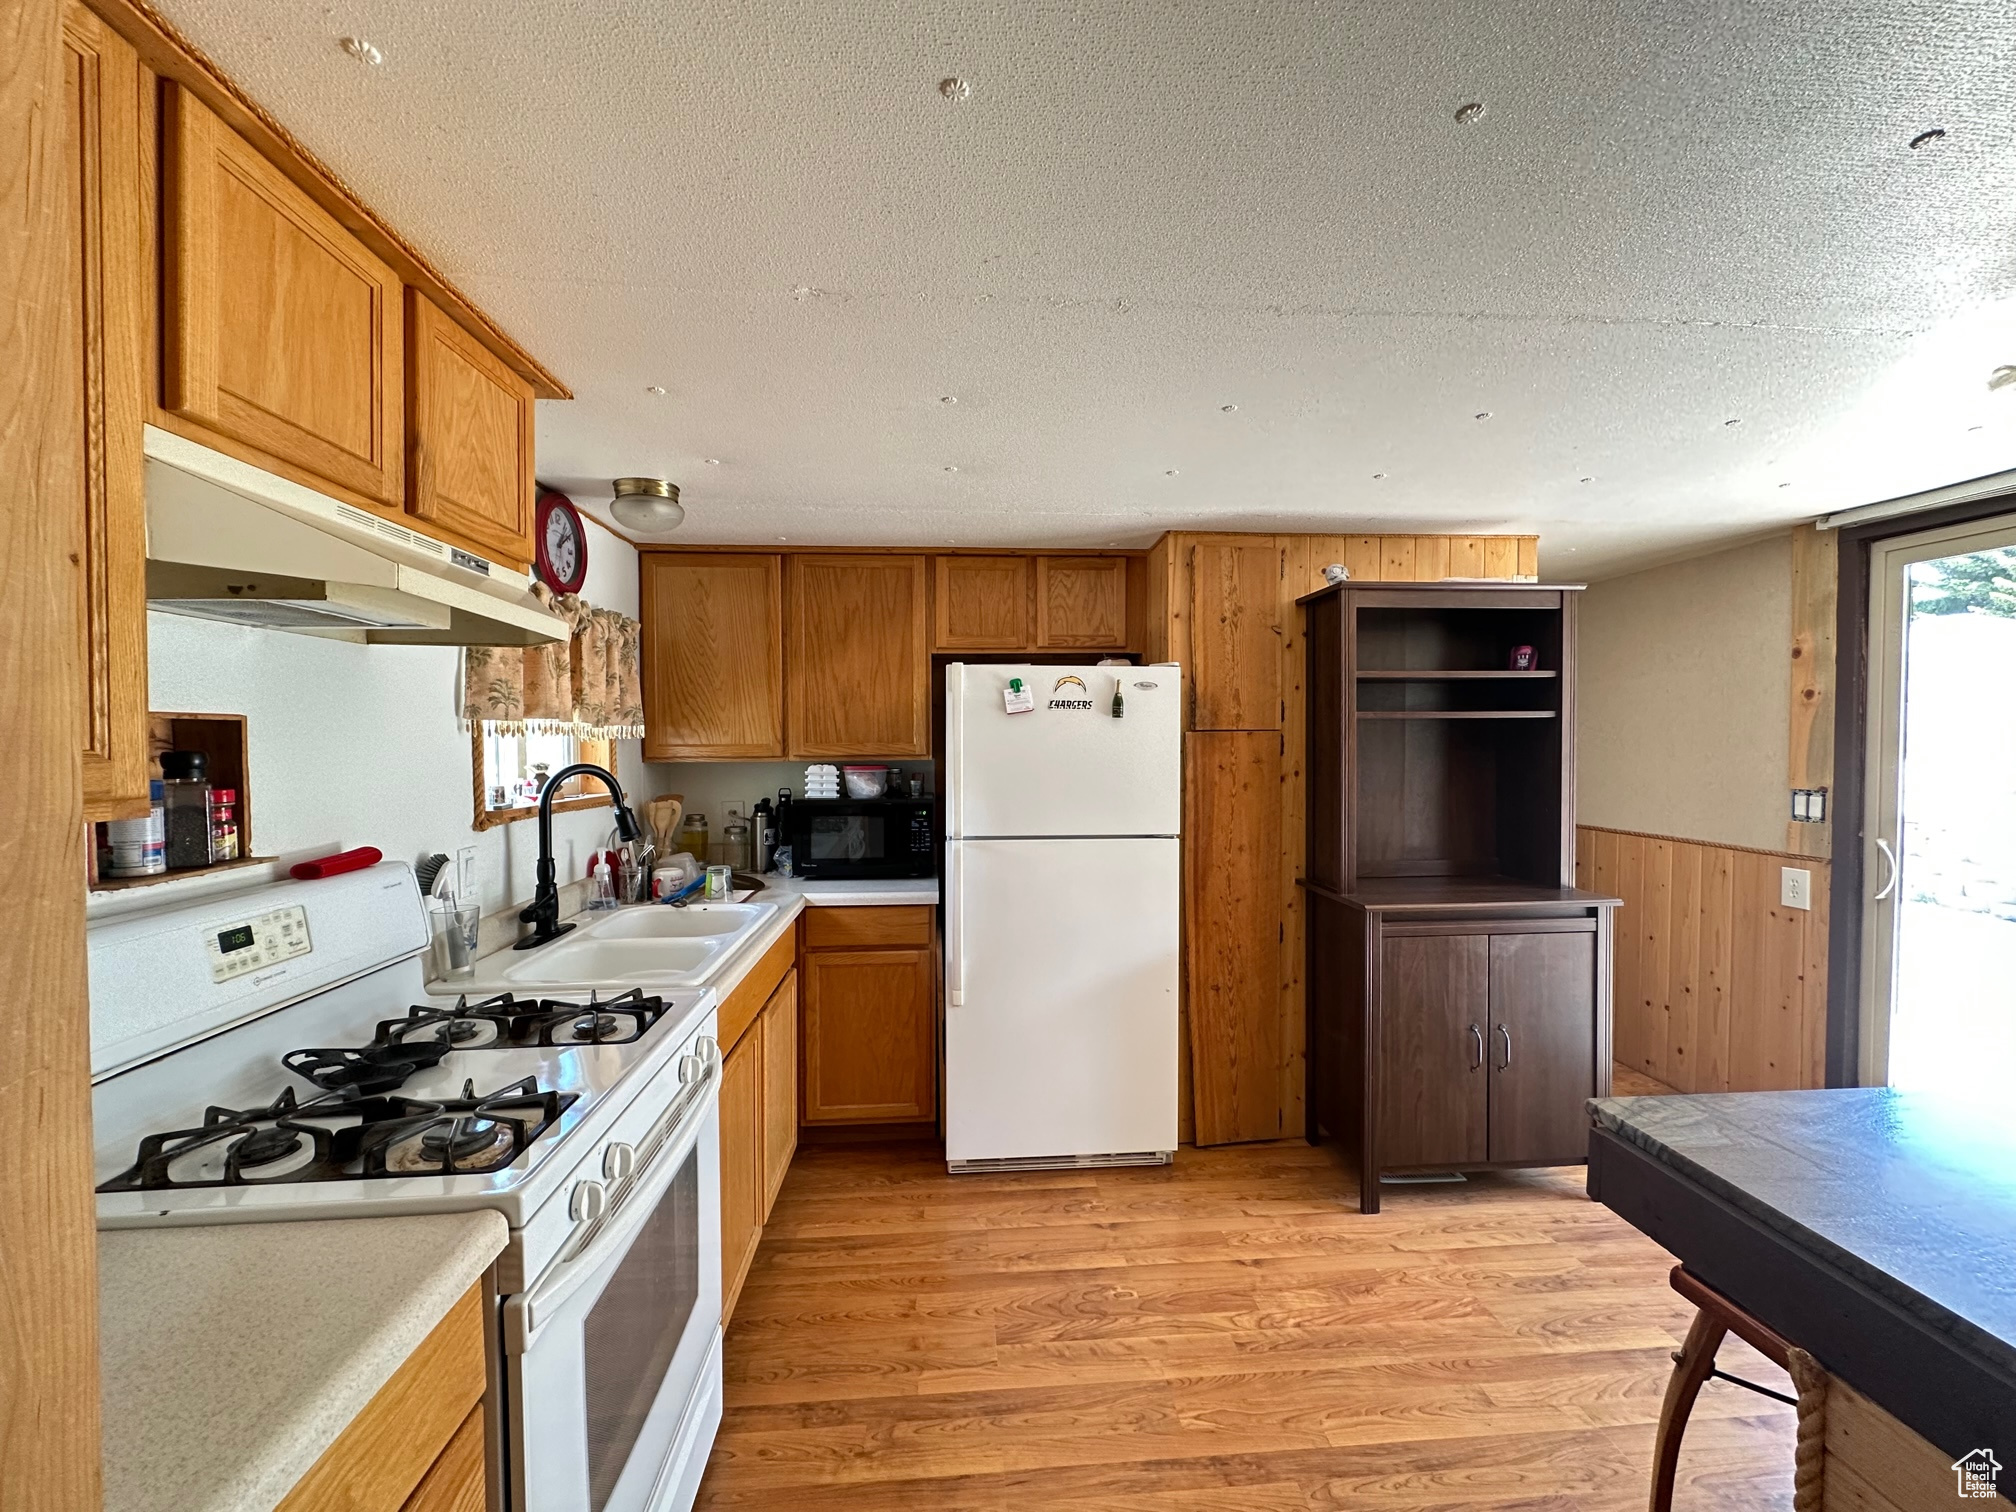 Kitchen with white appliances, laminate floors, sink